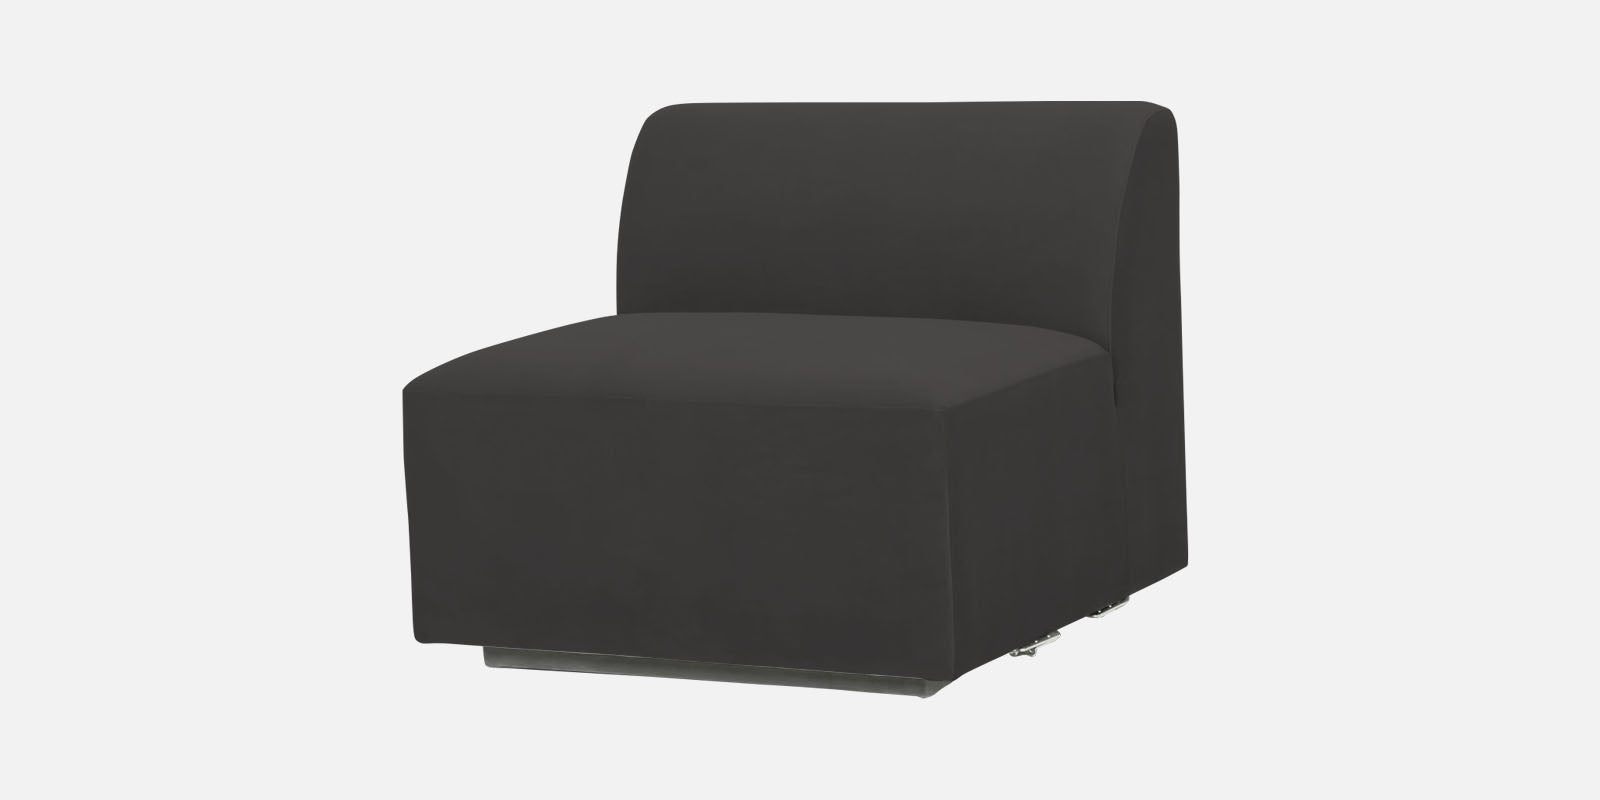 Bufa Velvet RHS Sectional Sofa In Hory Grey Colour With Ottoman